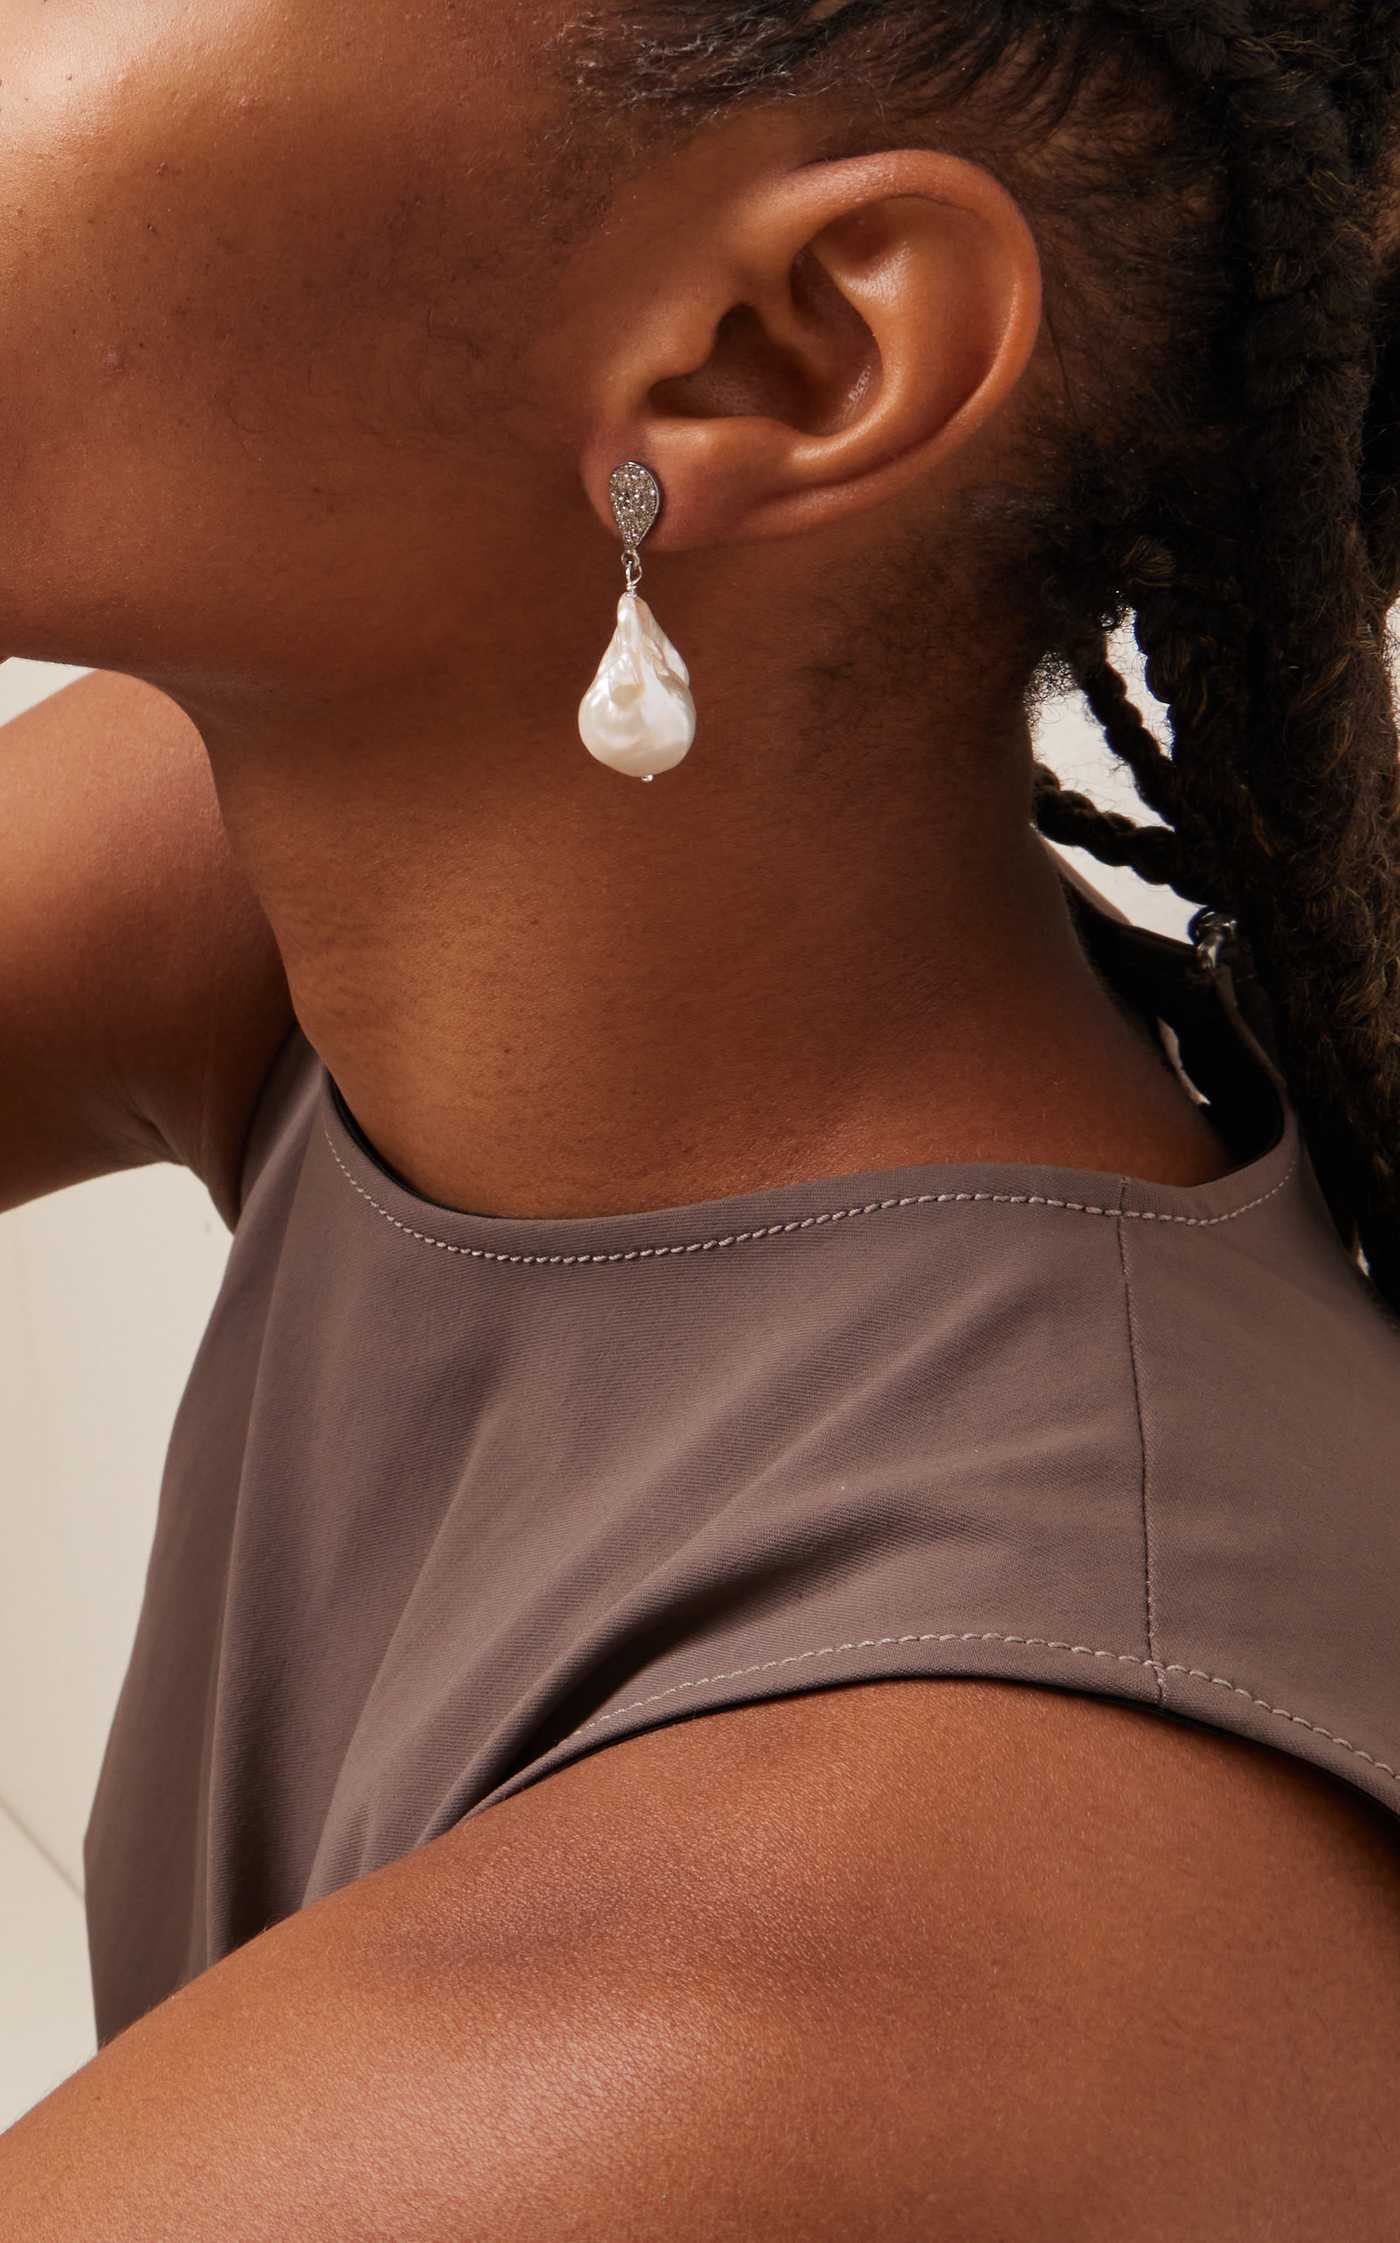 Diamond Teardrop and Baroque Pearl Earrings